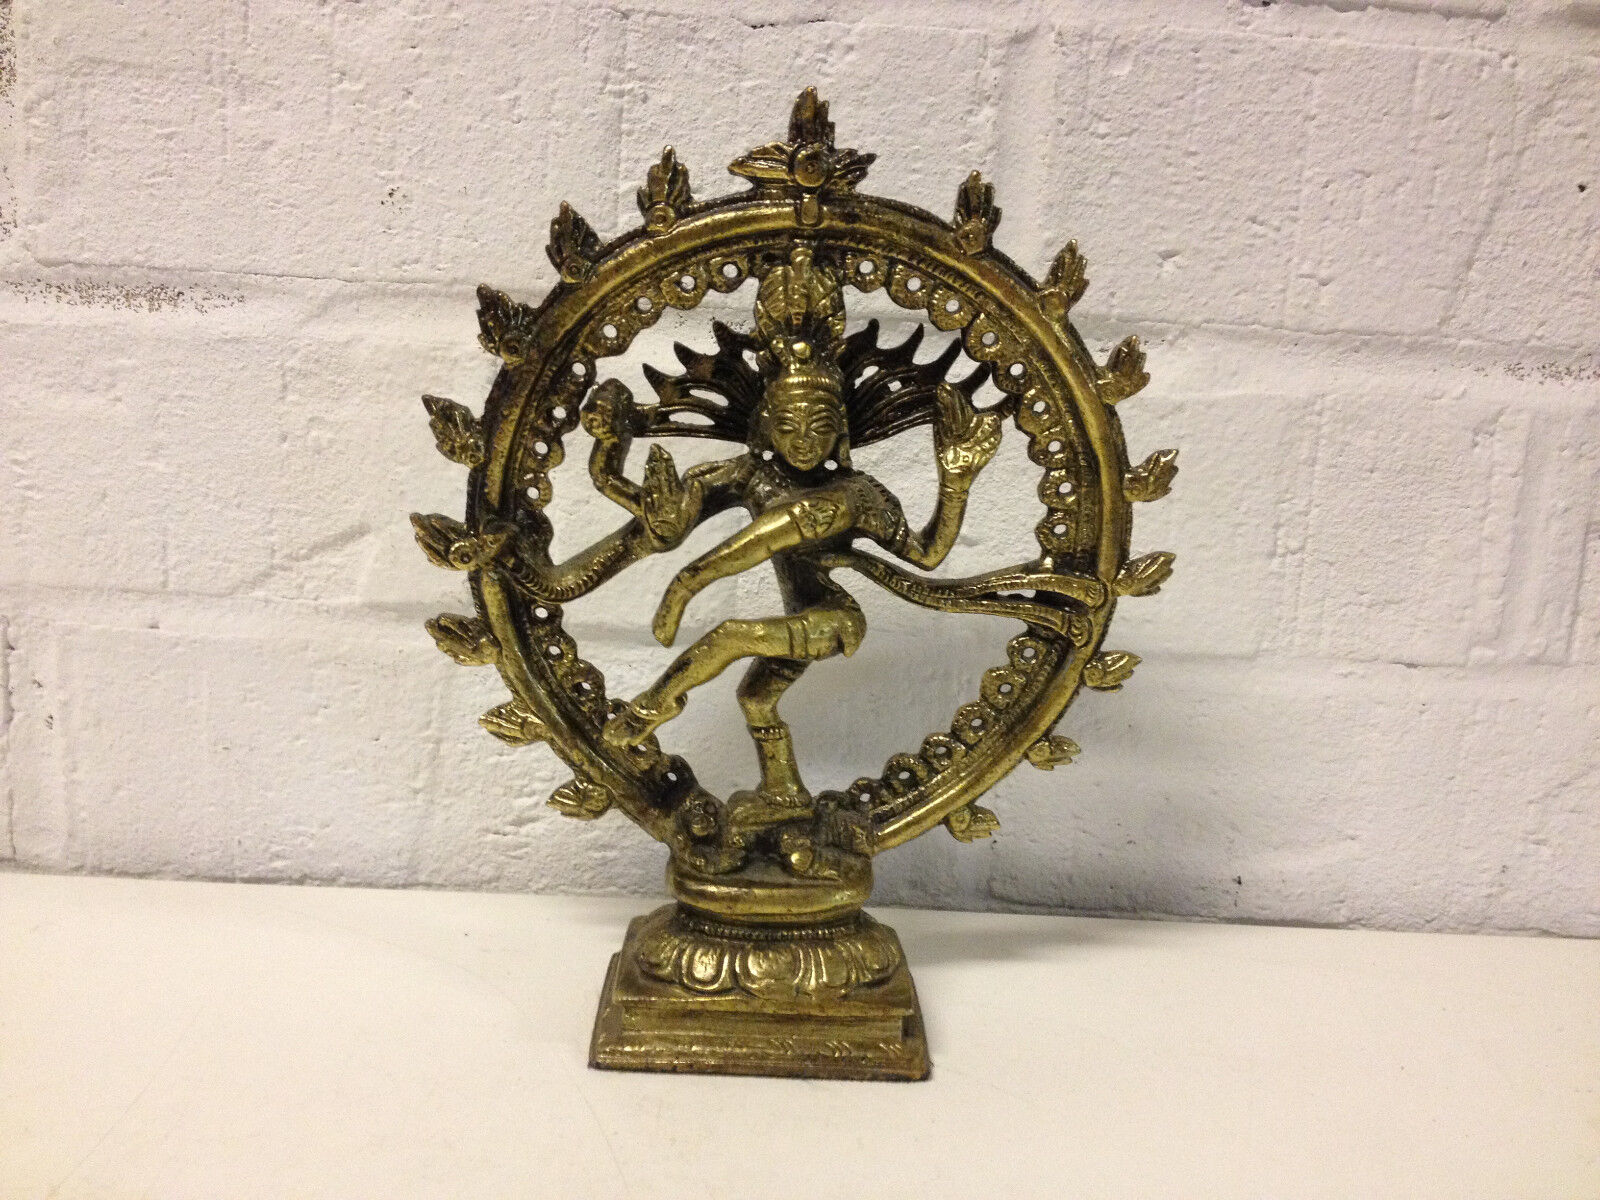 Possibly Vintage Gilt Metal Asian Indian Dancing Shiva Nataraja Statue Figurine